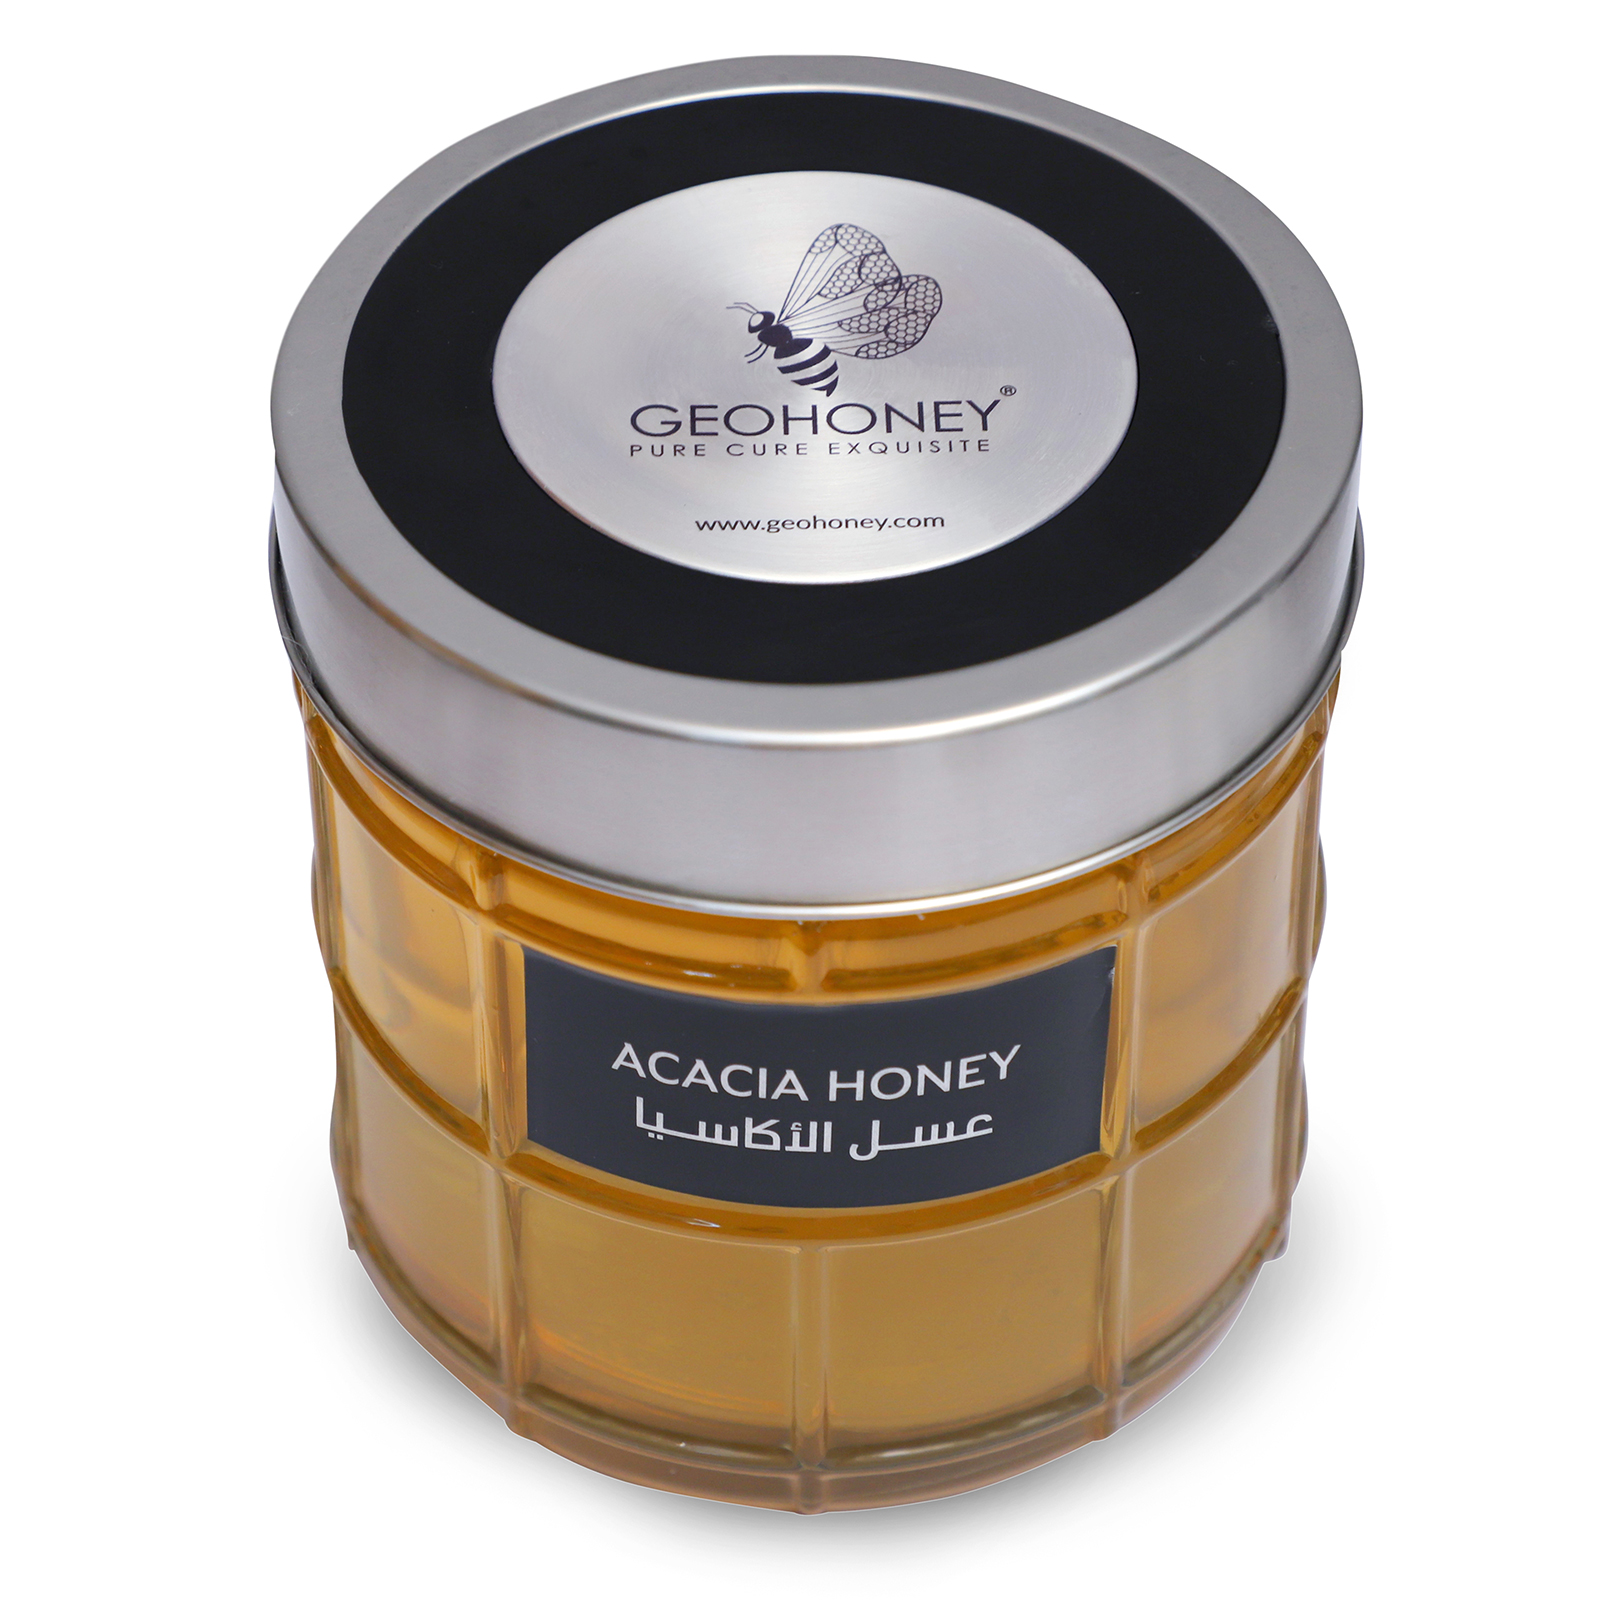 Acacia honey.JPG  by geohoney